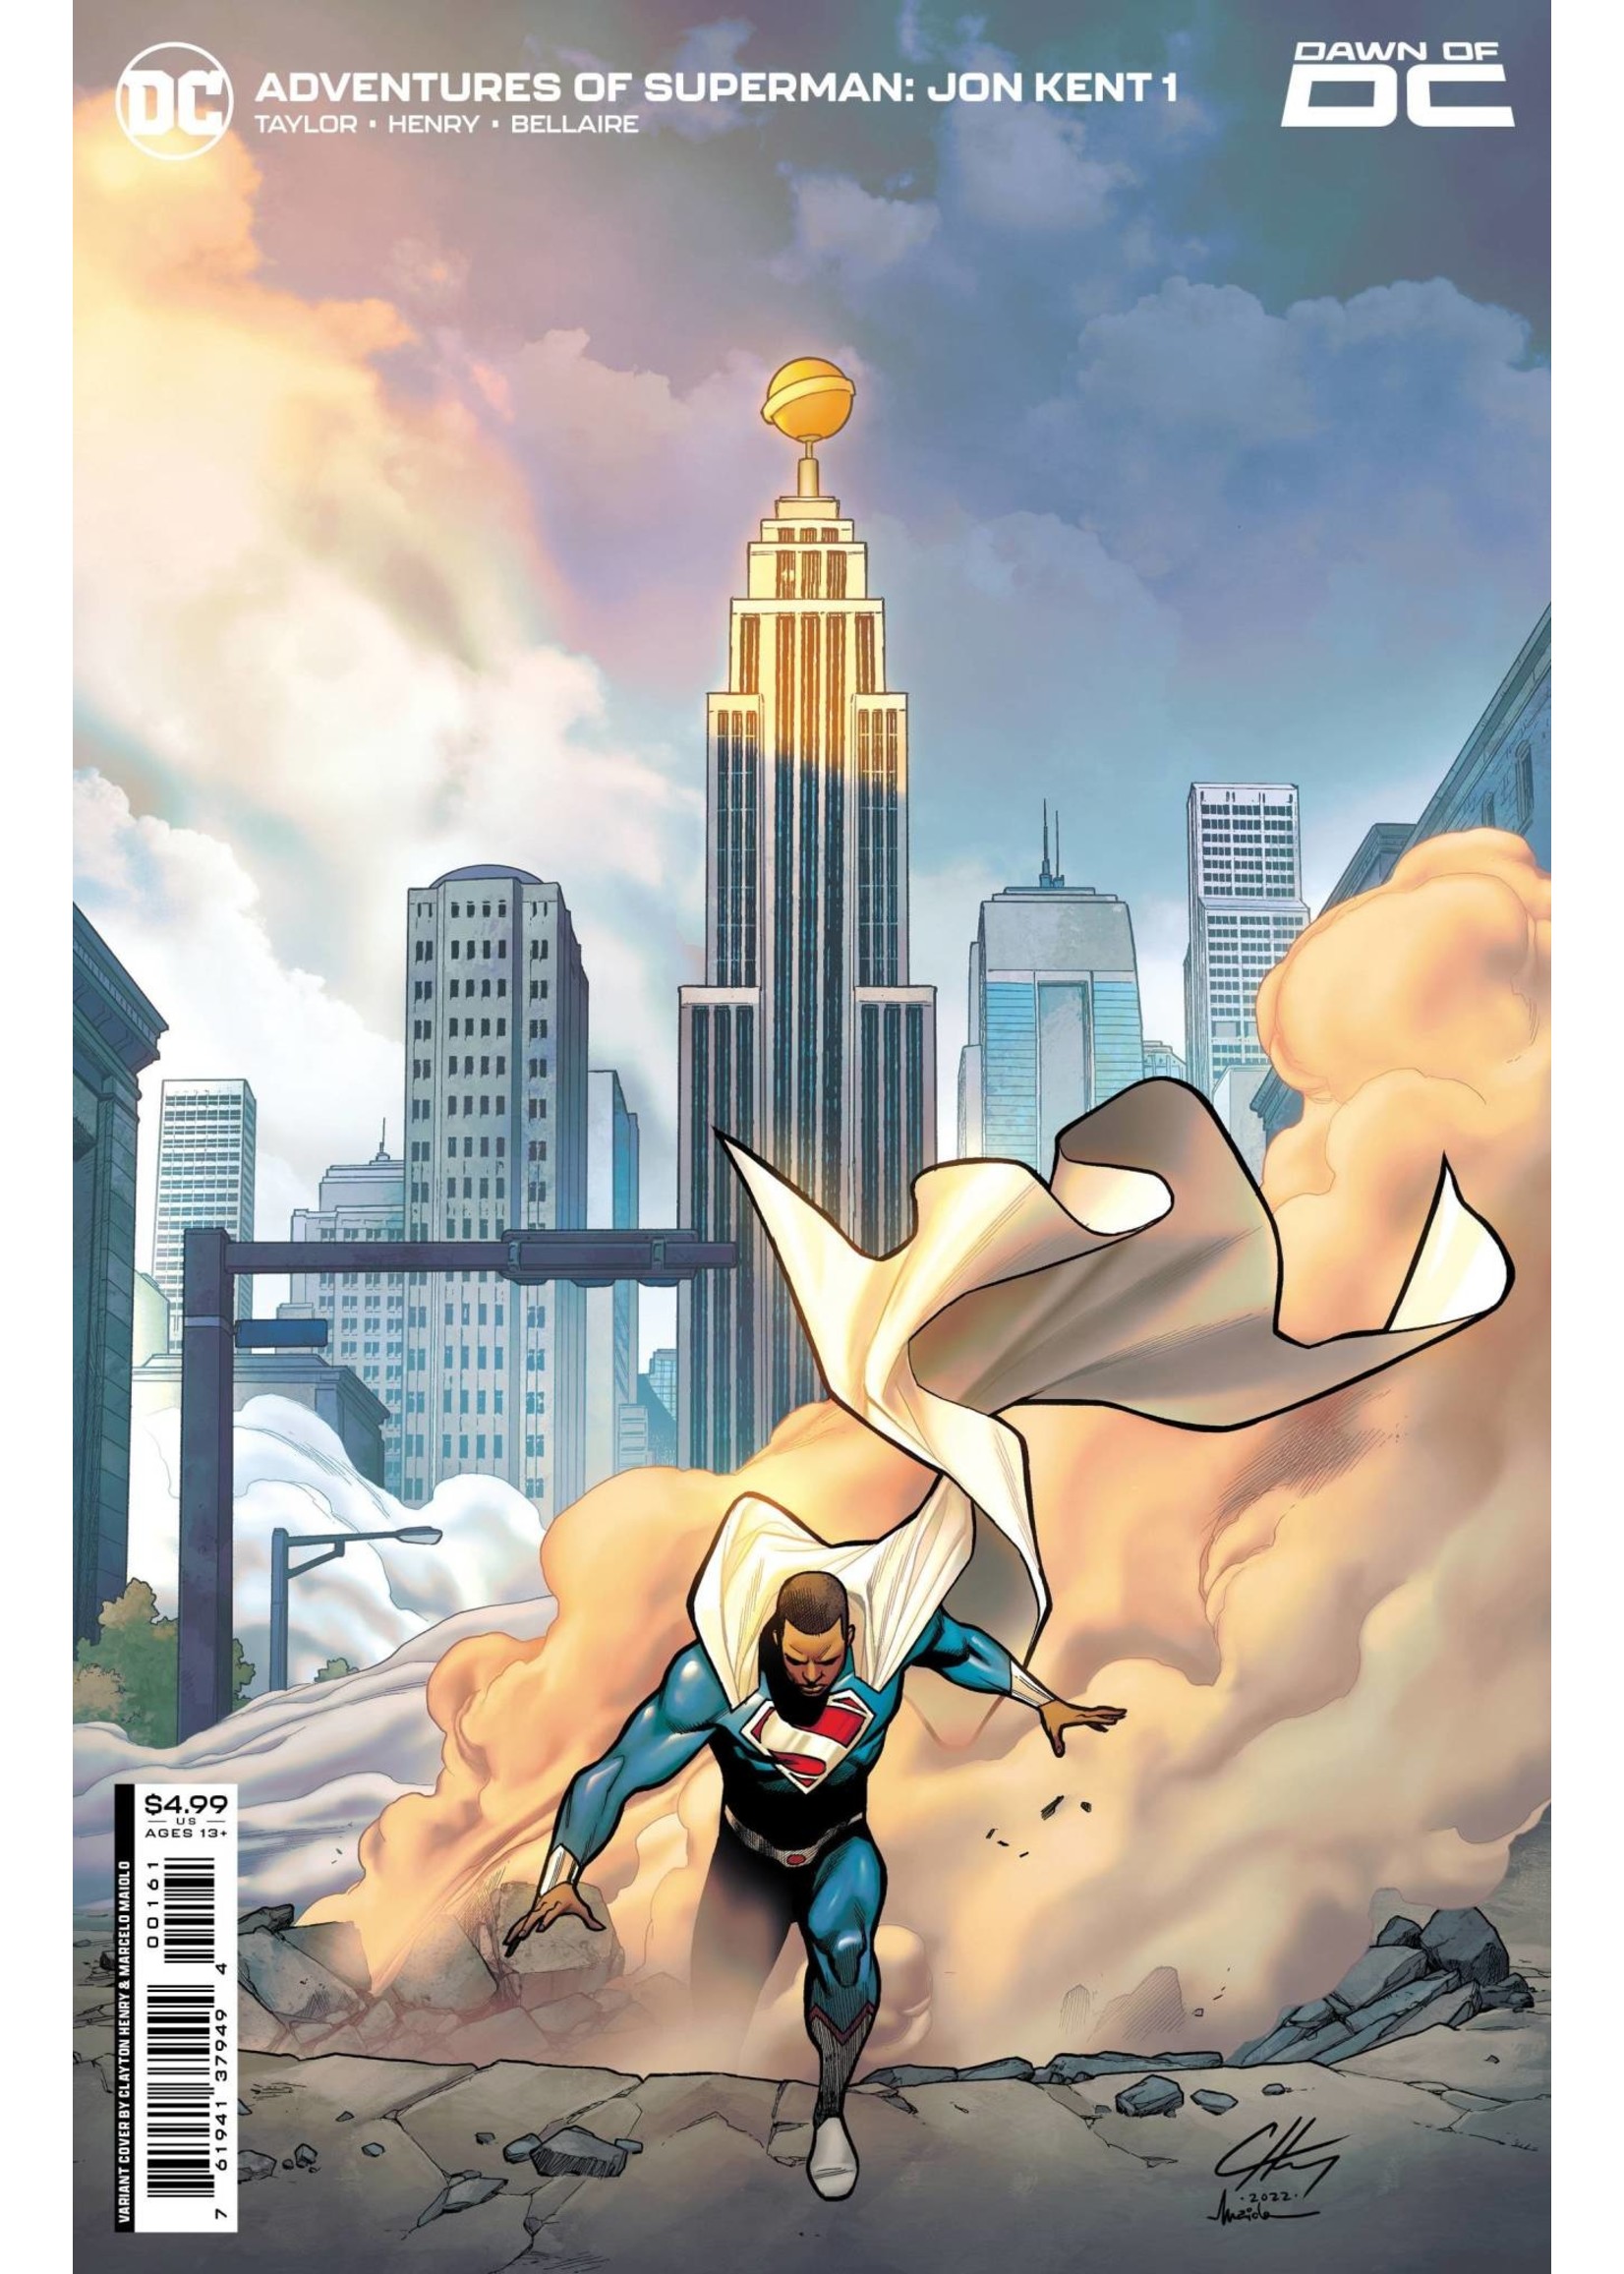 DC COMICS ADVENTURES OF SUPERMAN JON KENT #1 HENRY CARD